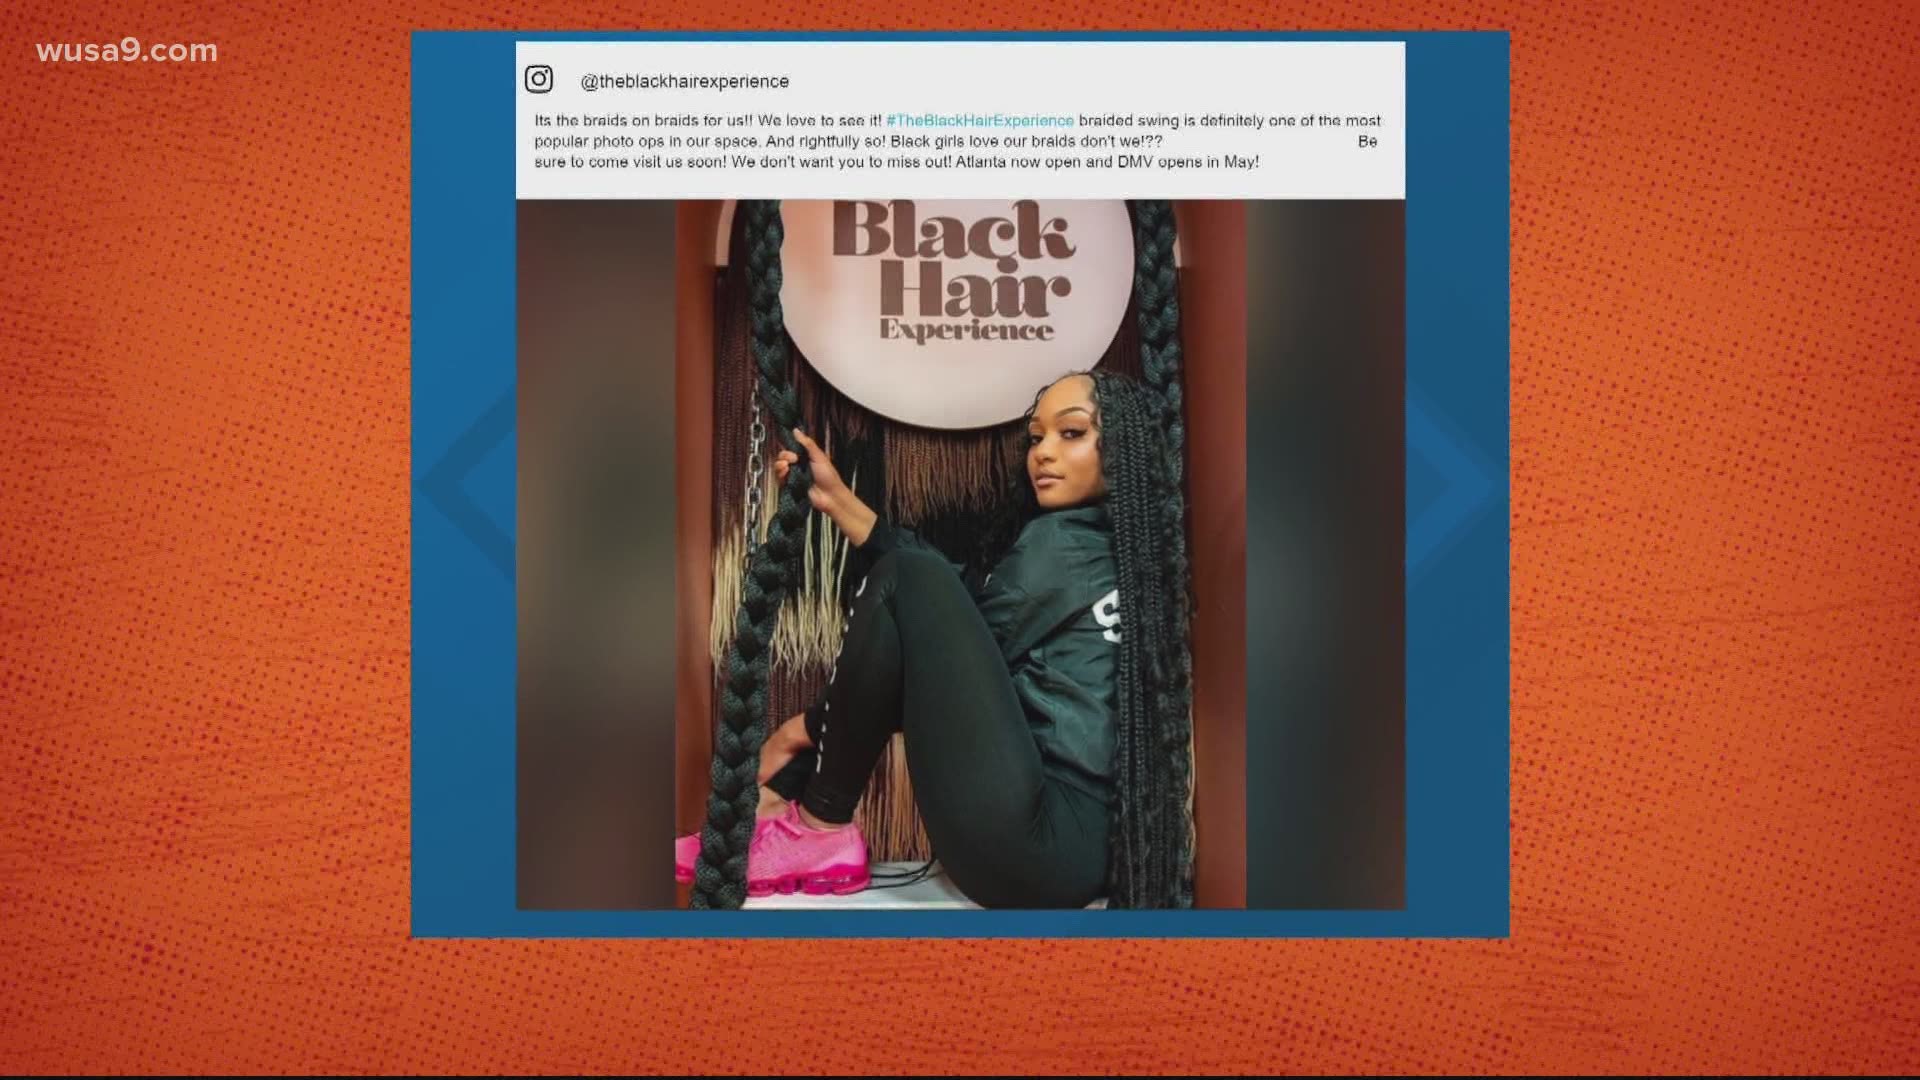 The Black Hair Experience celebrates Black women and their hair.